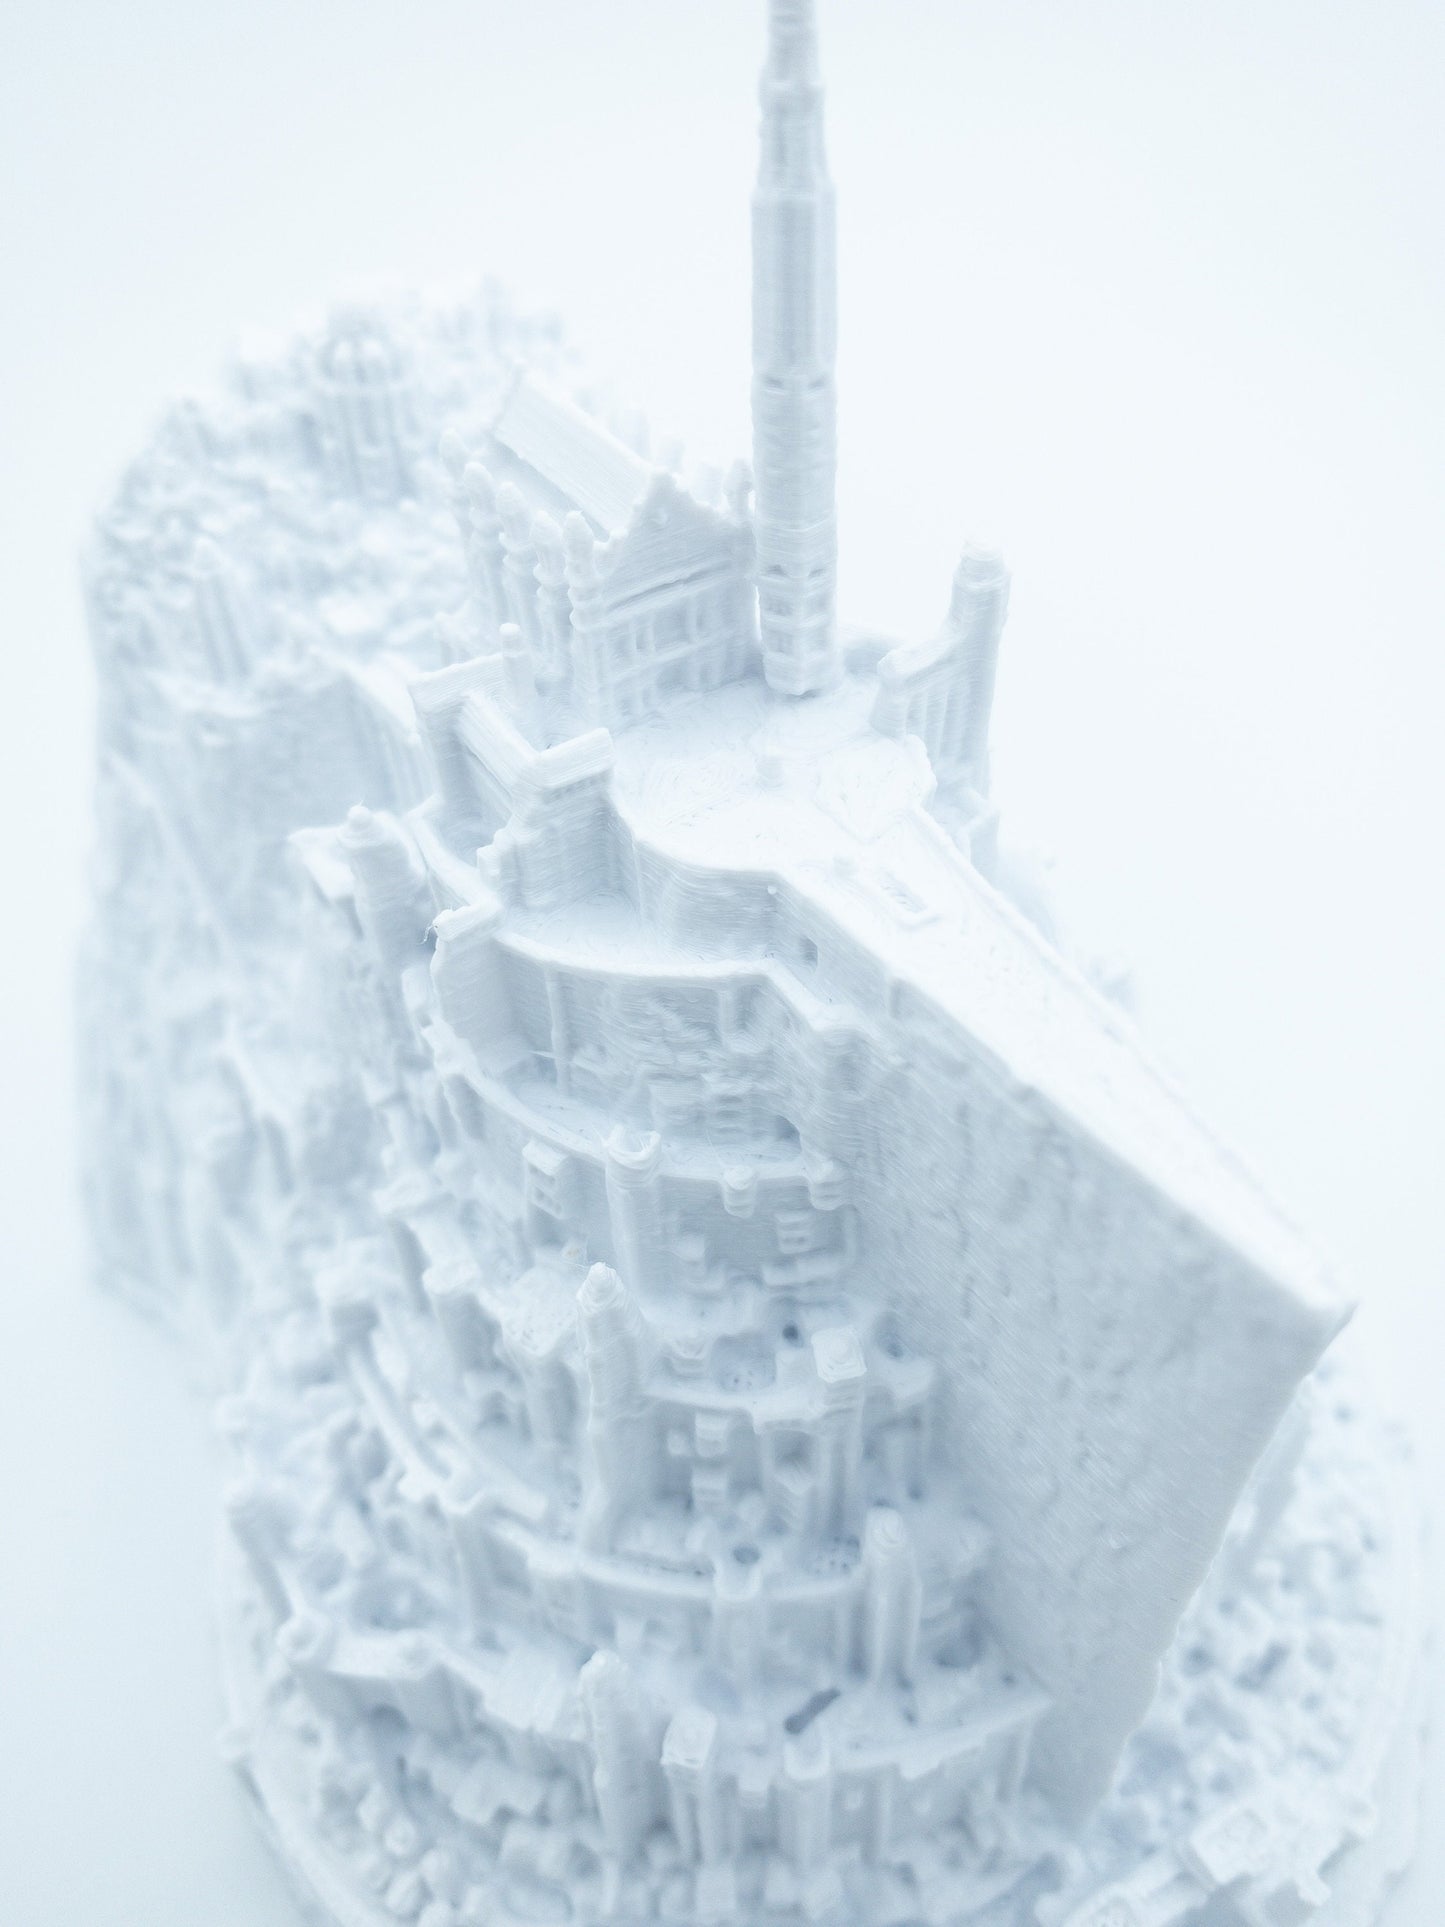 Minas Tirith Model- 3D Printed